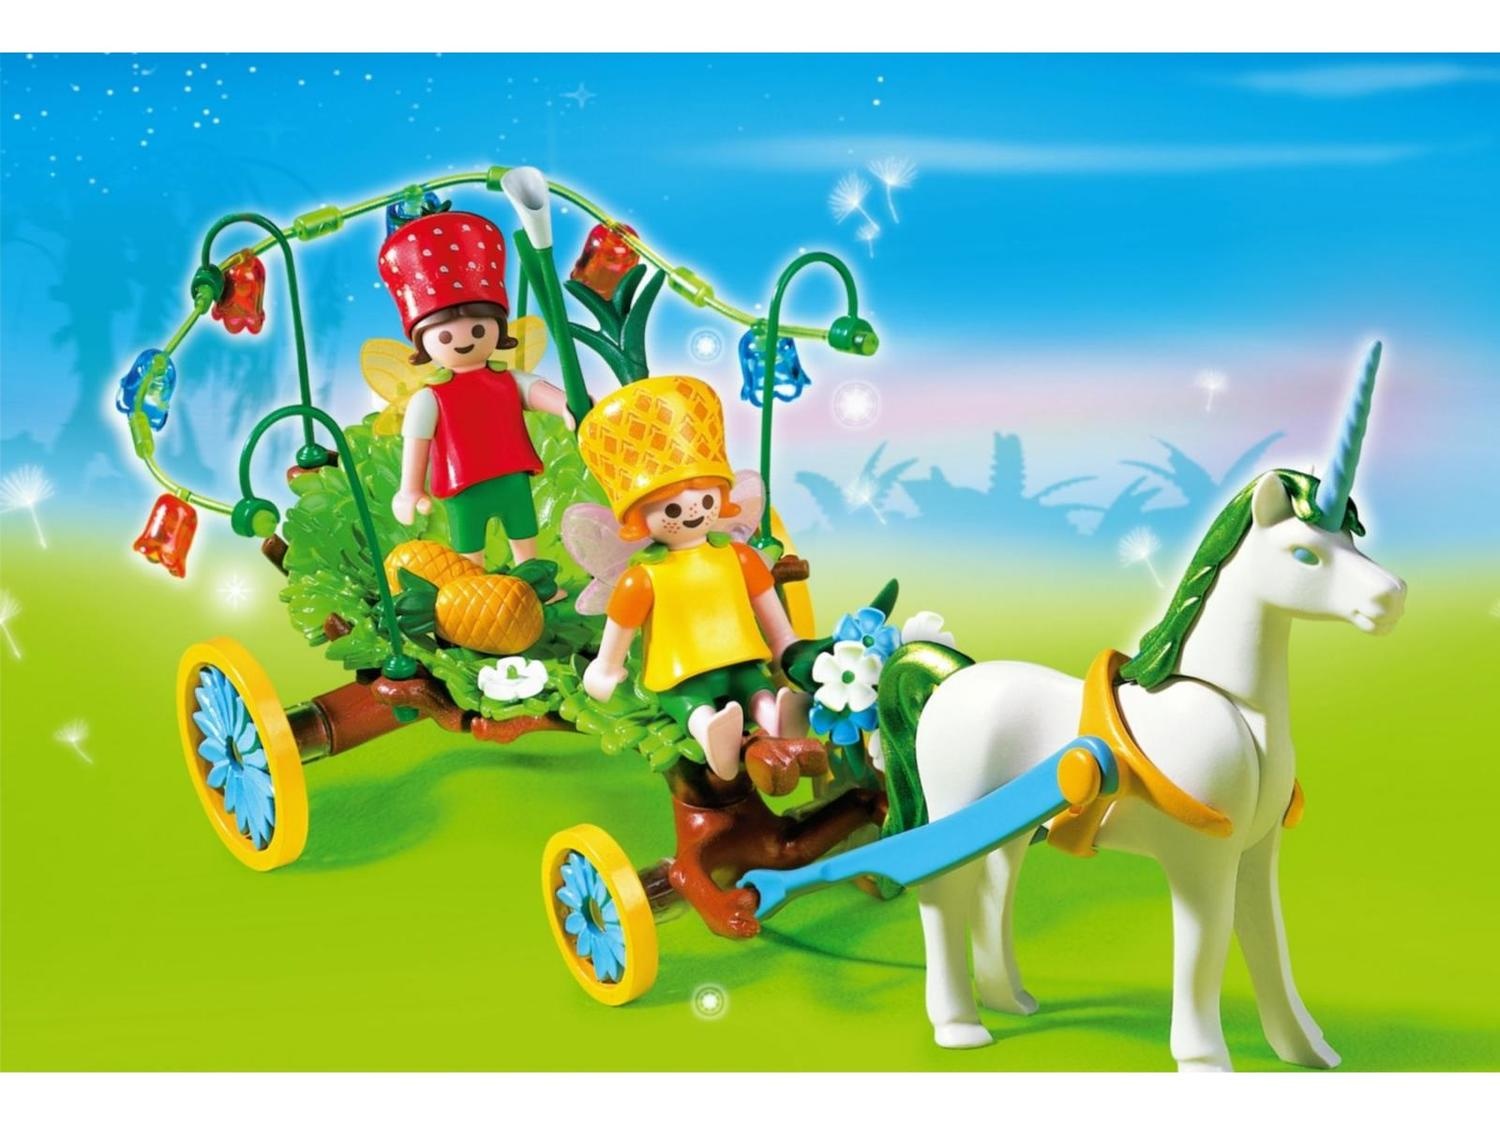 playmobil fairy carriage